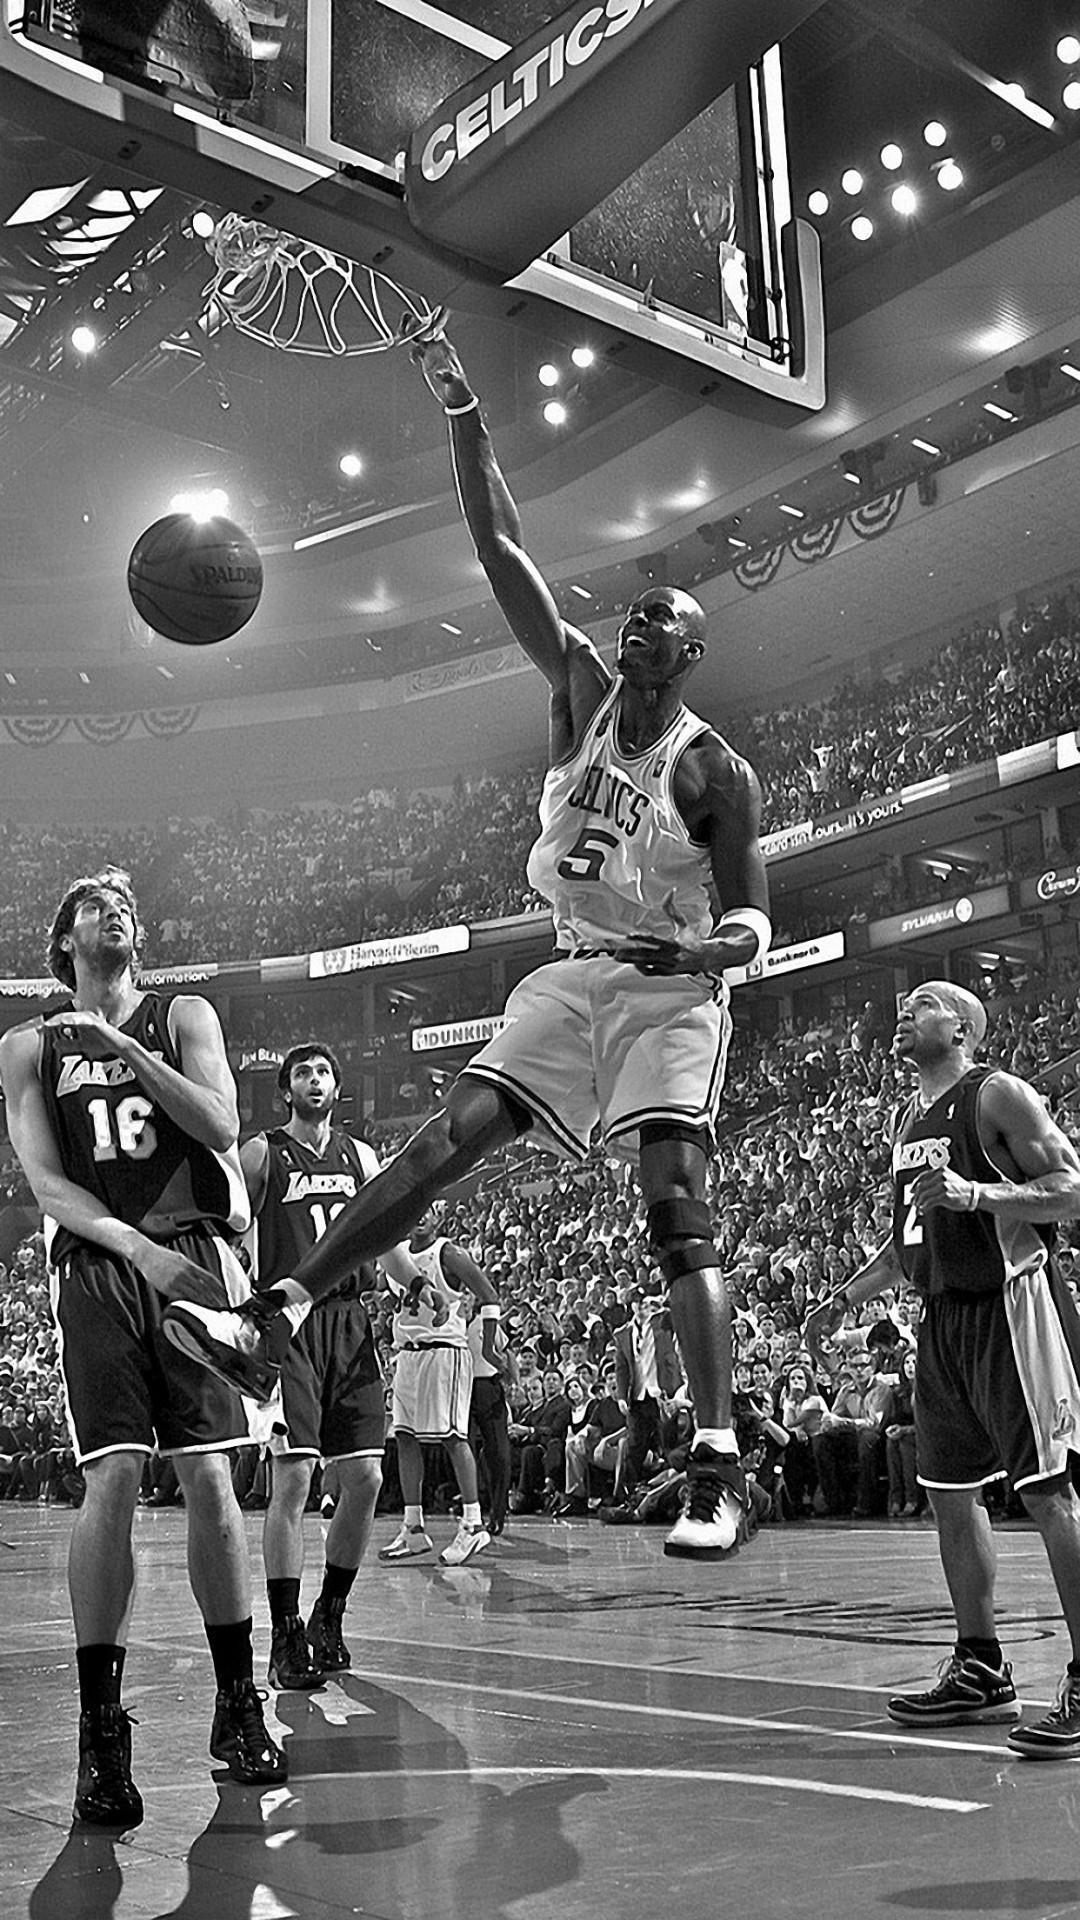 iPhone Basketball Wallpaper Nba